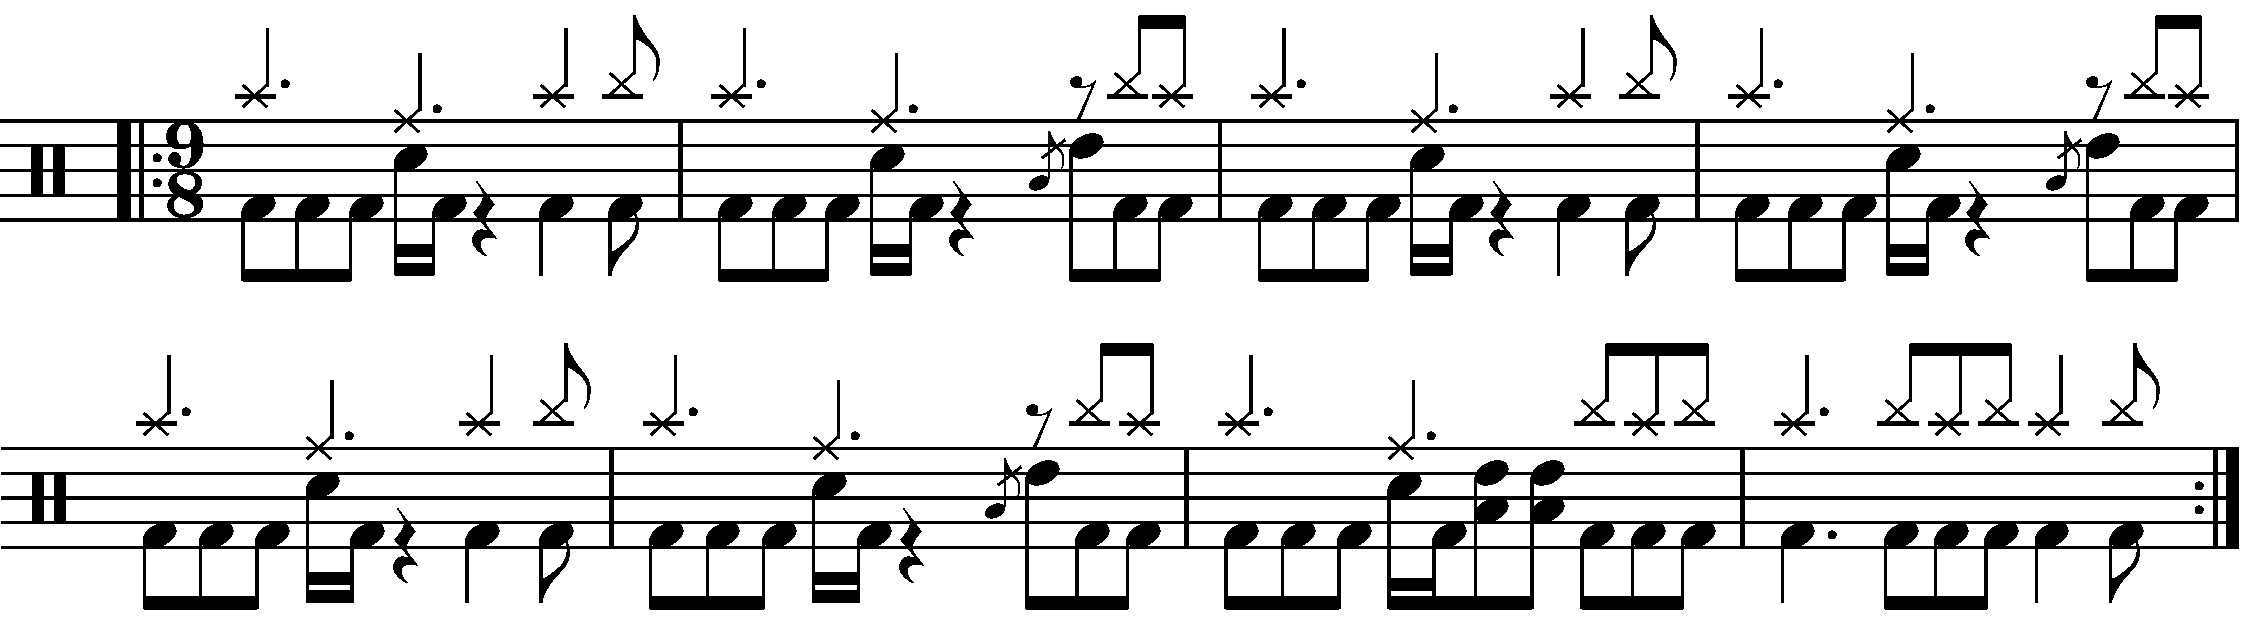 An eight bar phrase built of an AAAB pattern using 2 bar 9/8 grooves